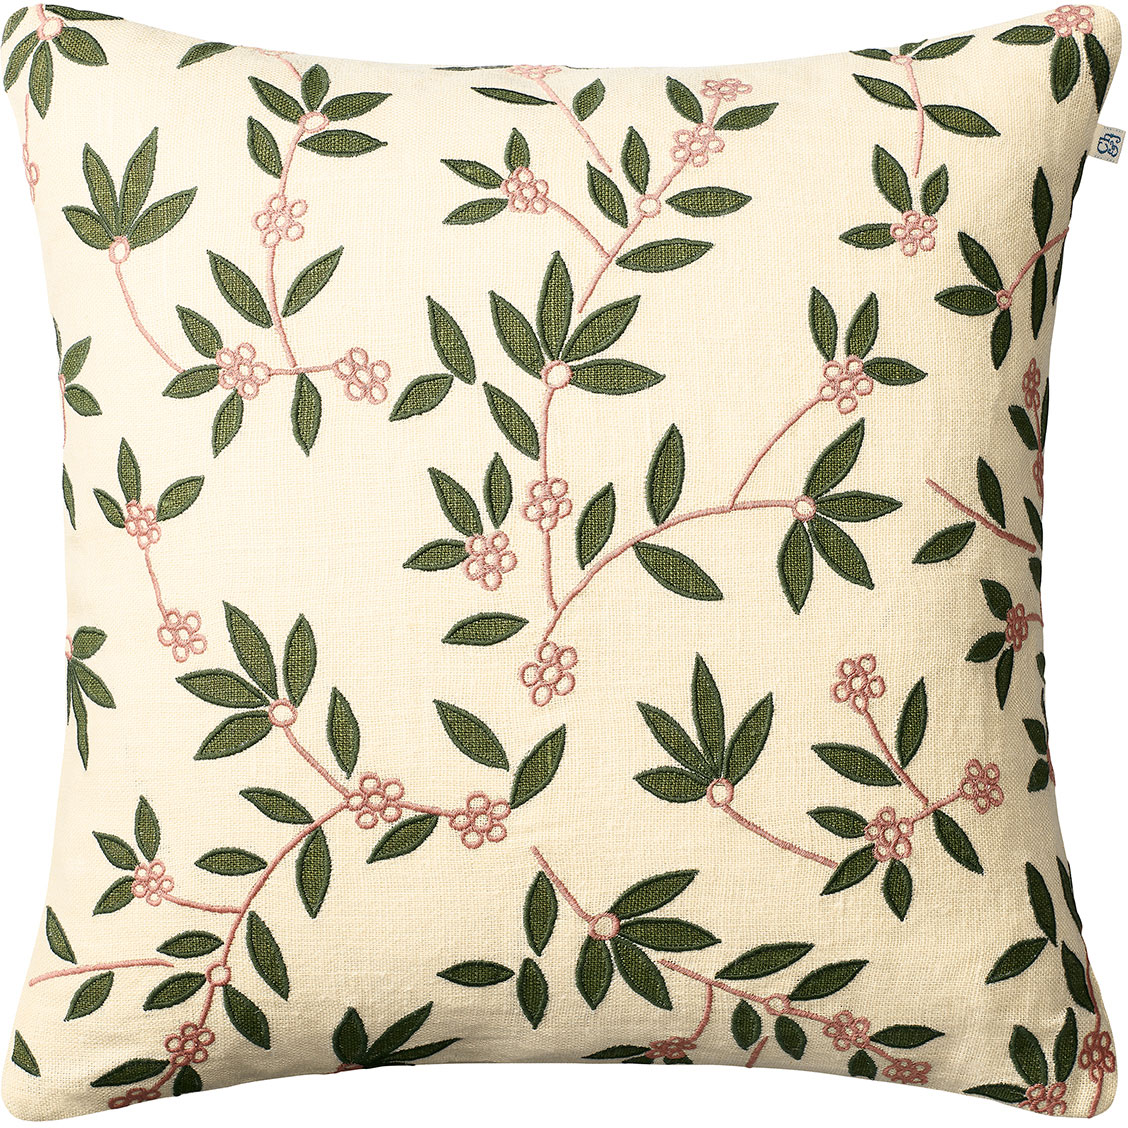 Gita Cushion Cover 50x50 cm, Light Beige / Cactus Green / Rose